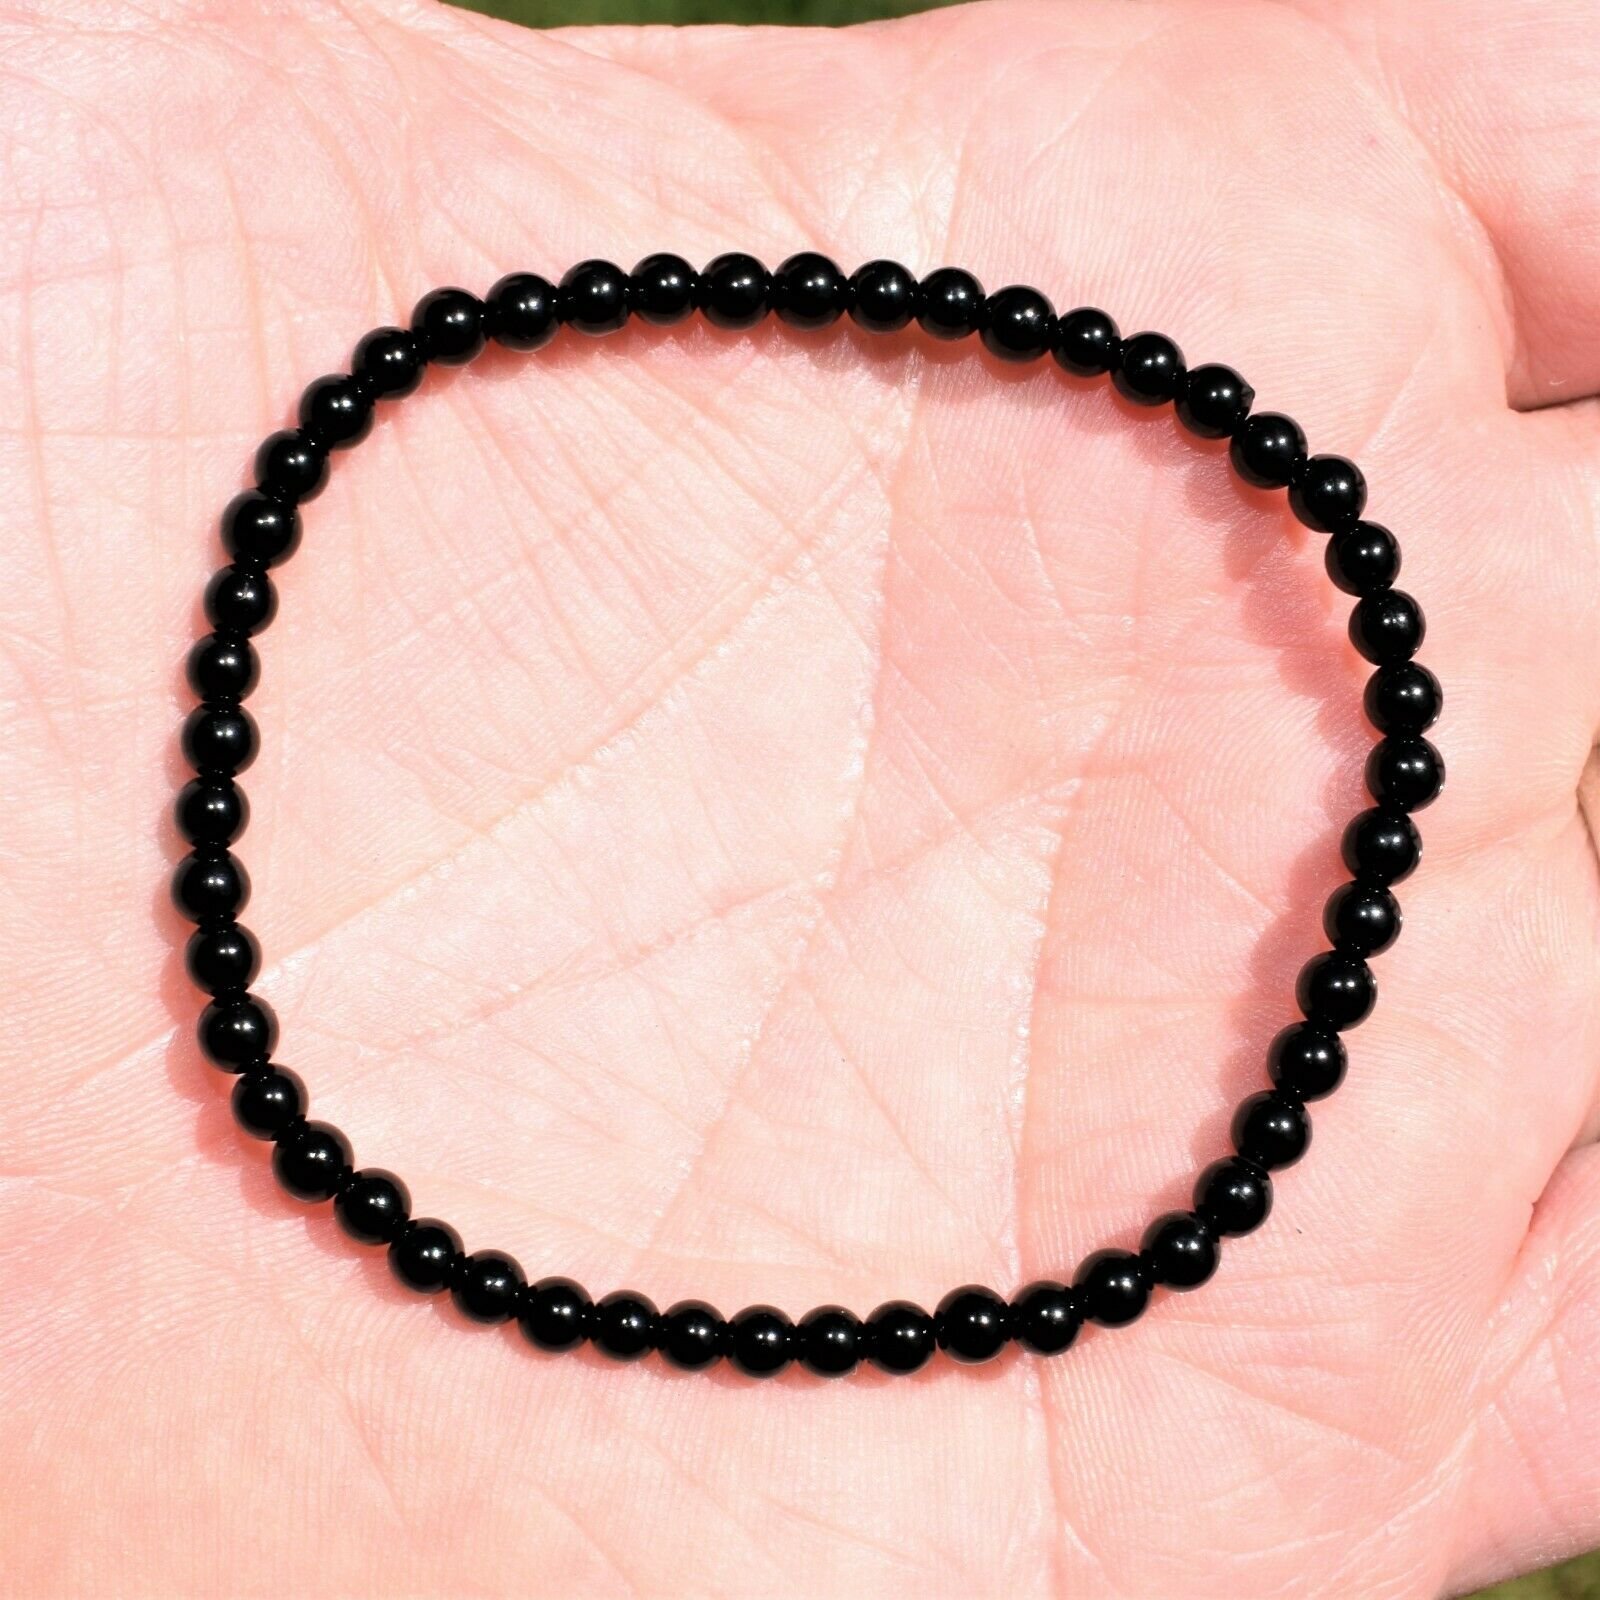 4mm black tourmaline 4mm selenite crystal bead bracelet 7.5